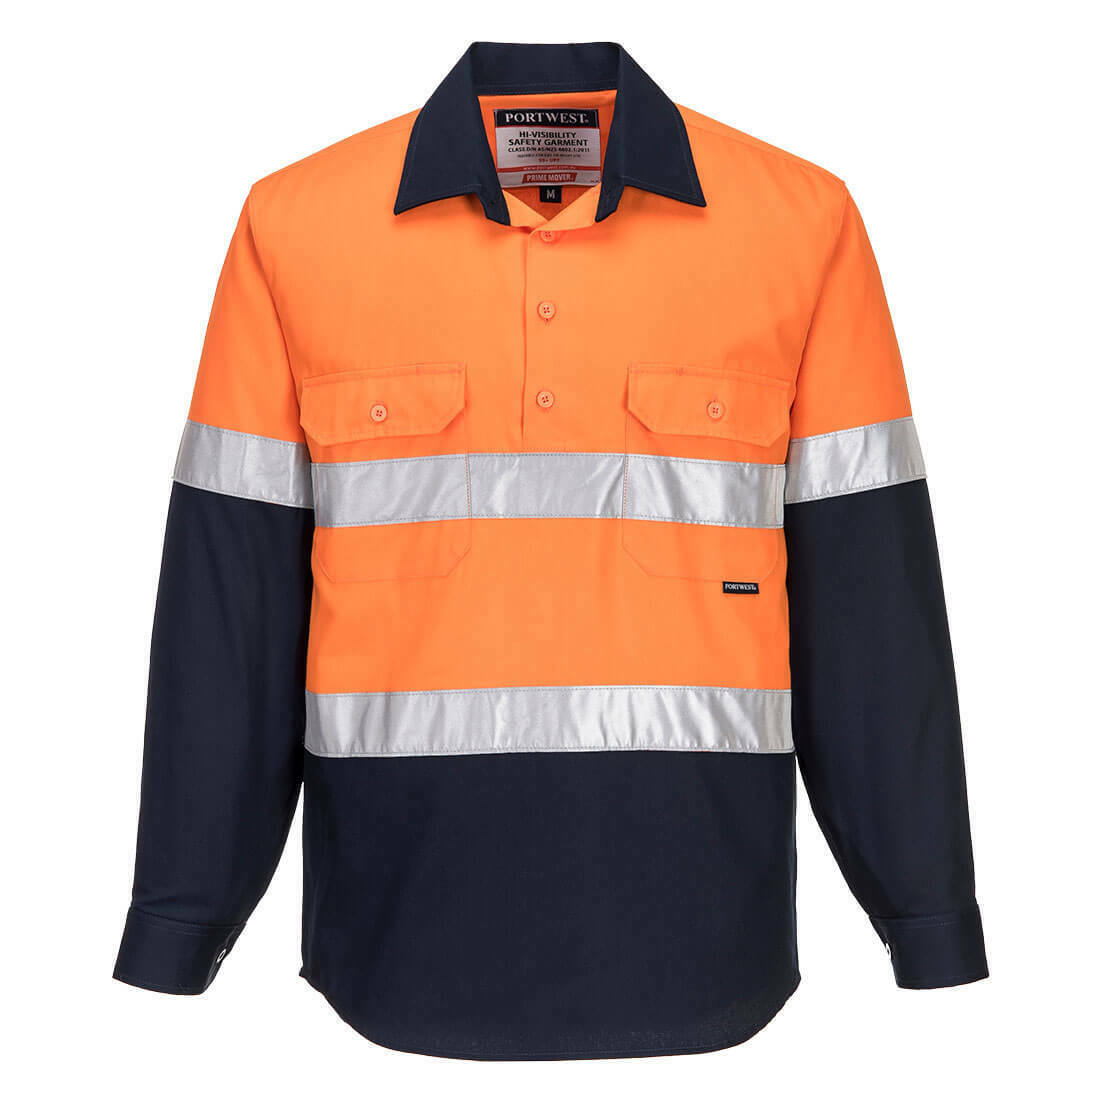 Portwest Mens Prime Mover Hi-Vis Work Shirt Long Sleeve Cotton Drill Shirt MC101-Collins Clothing Co